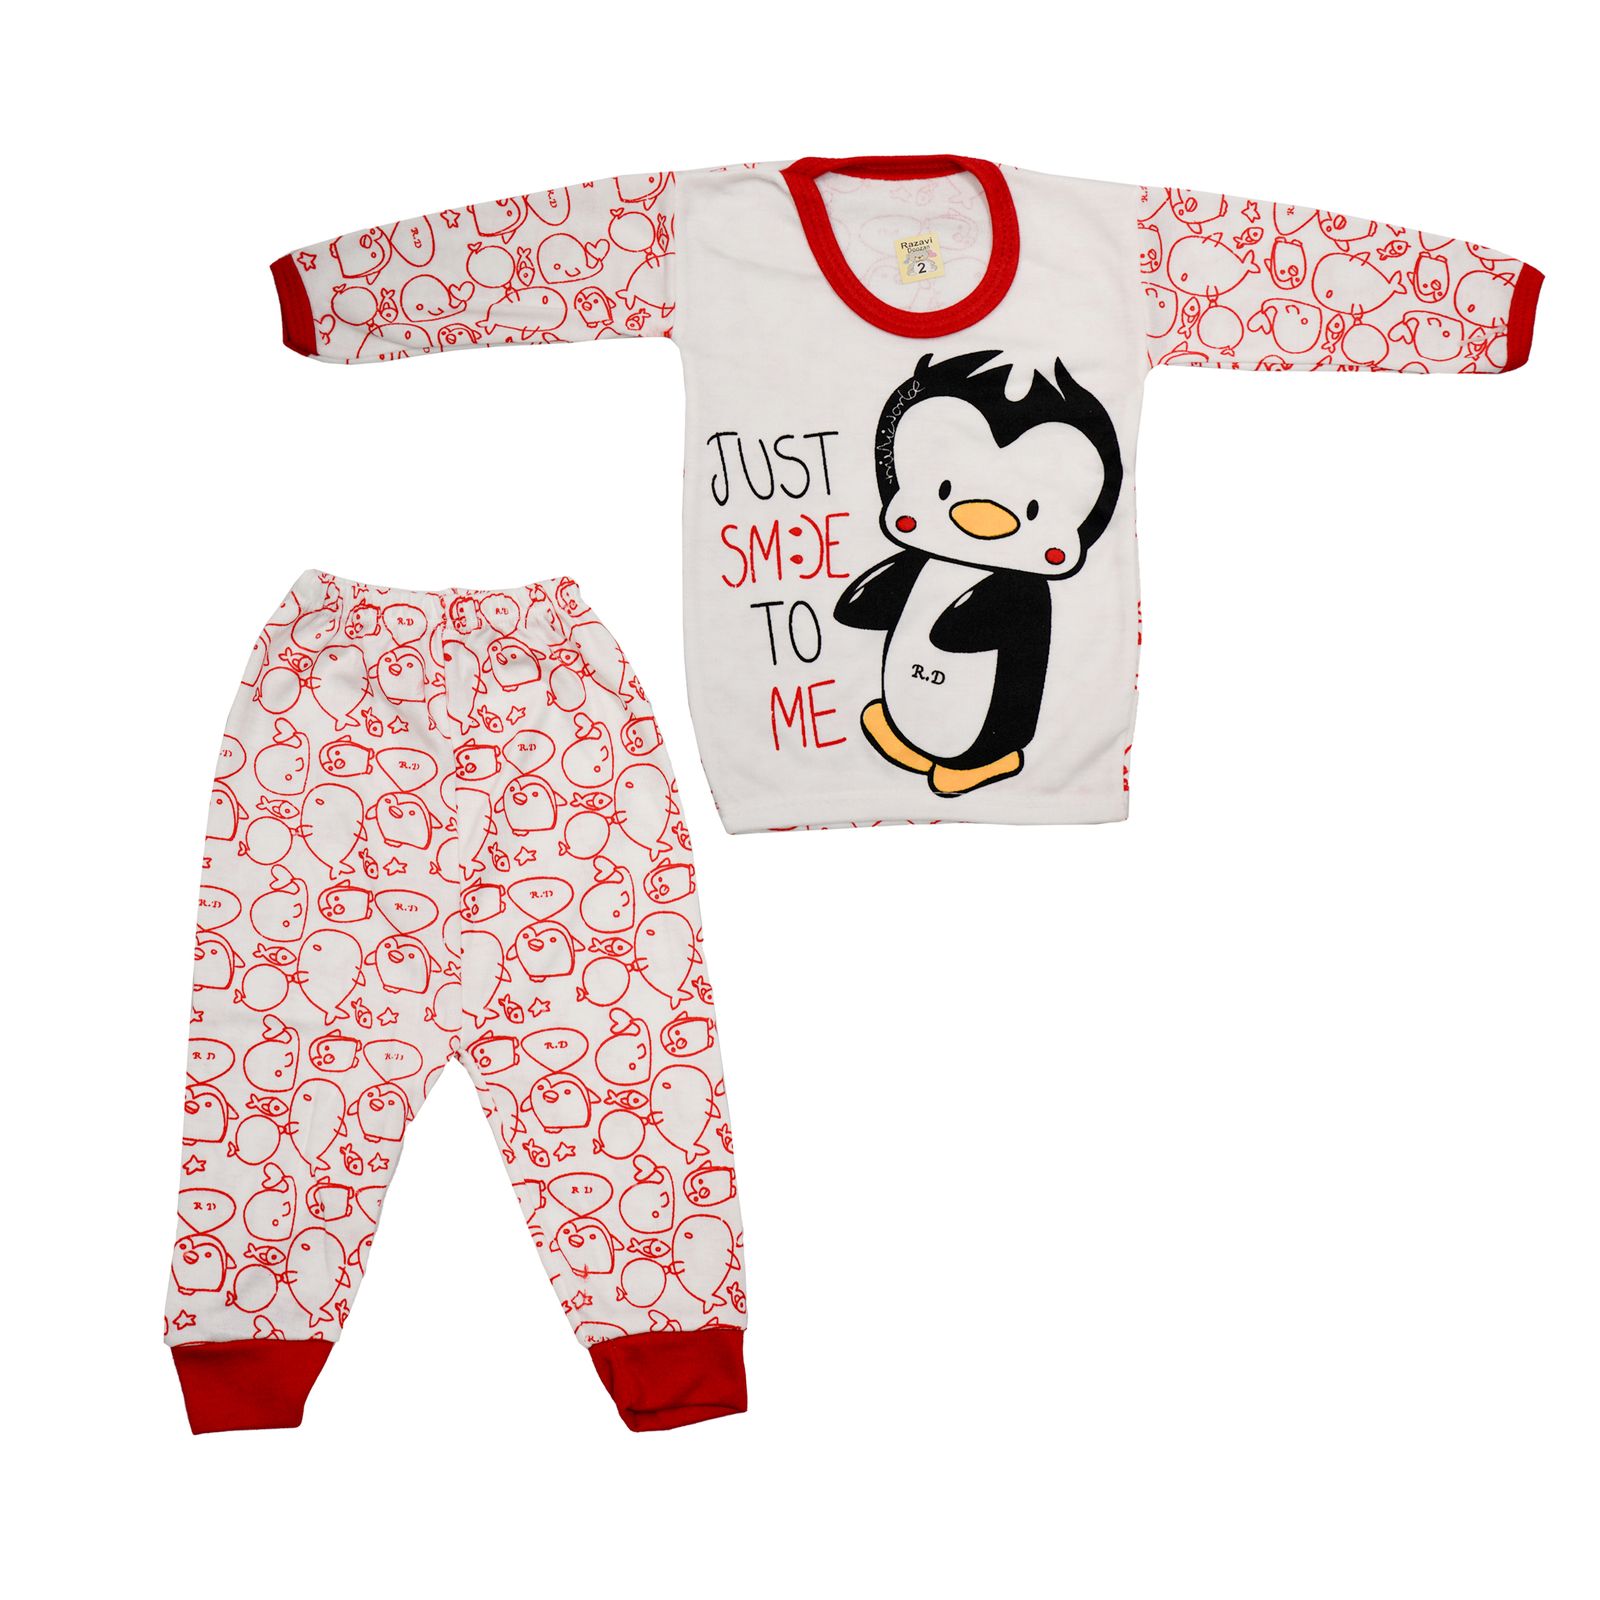 ست تی شرت و شلوار نوزادی مدل پنگوئن کد 1 رنگ قرمز -  - 2